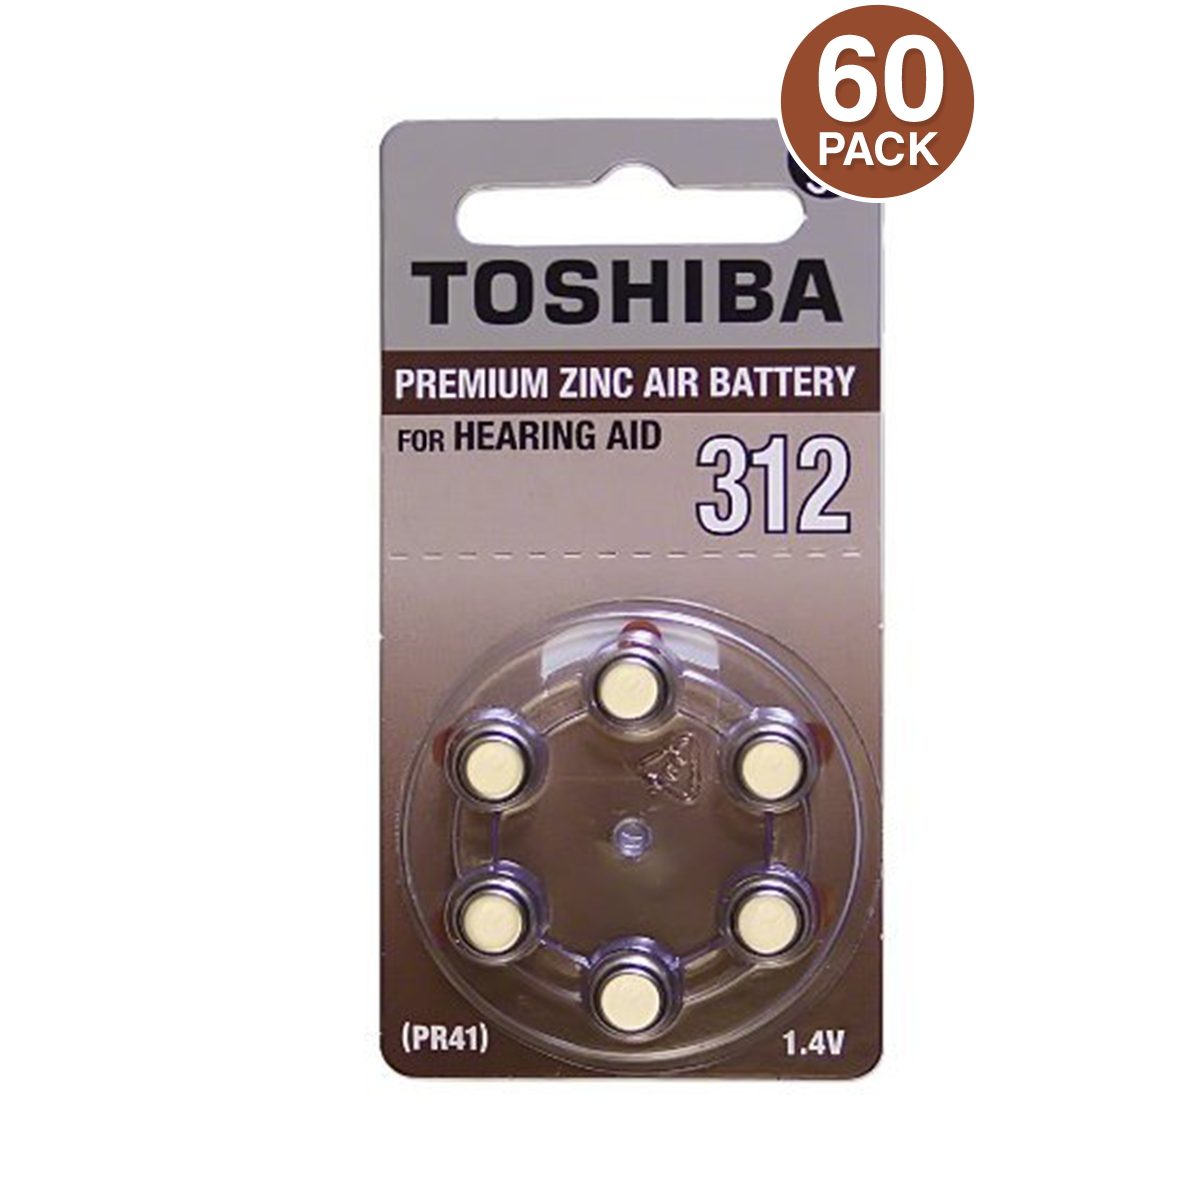 Toshiba Size 312 Hearing Aid Batteries PR41 (60 Batteries)